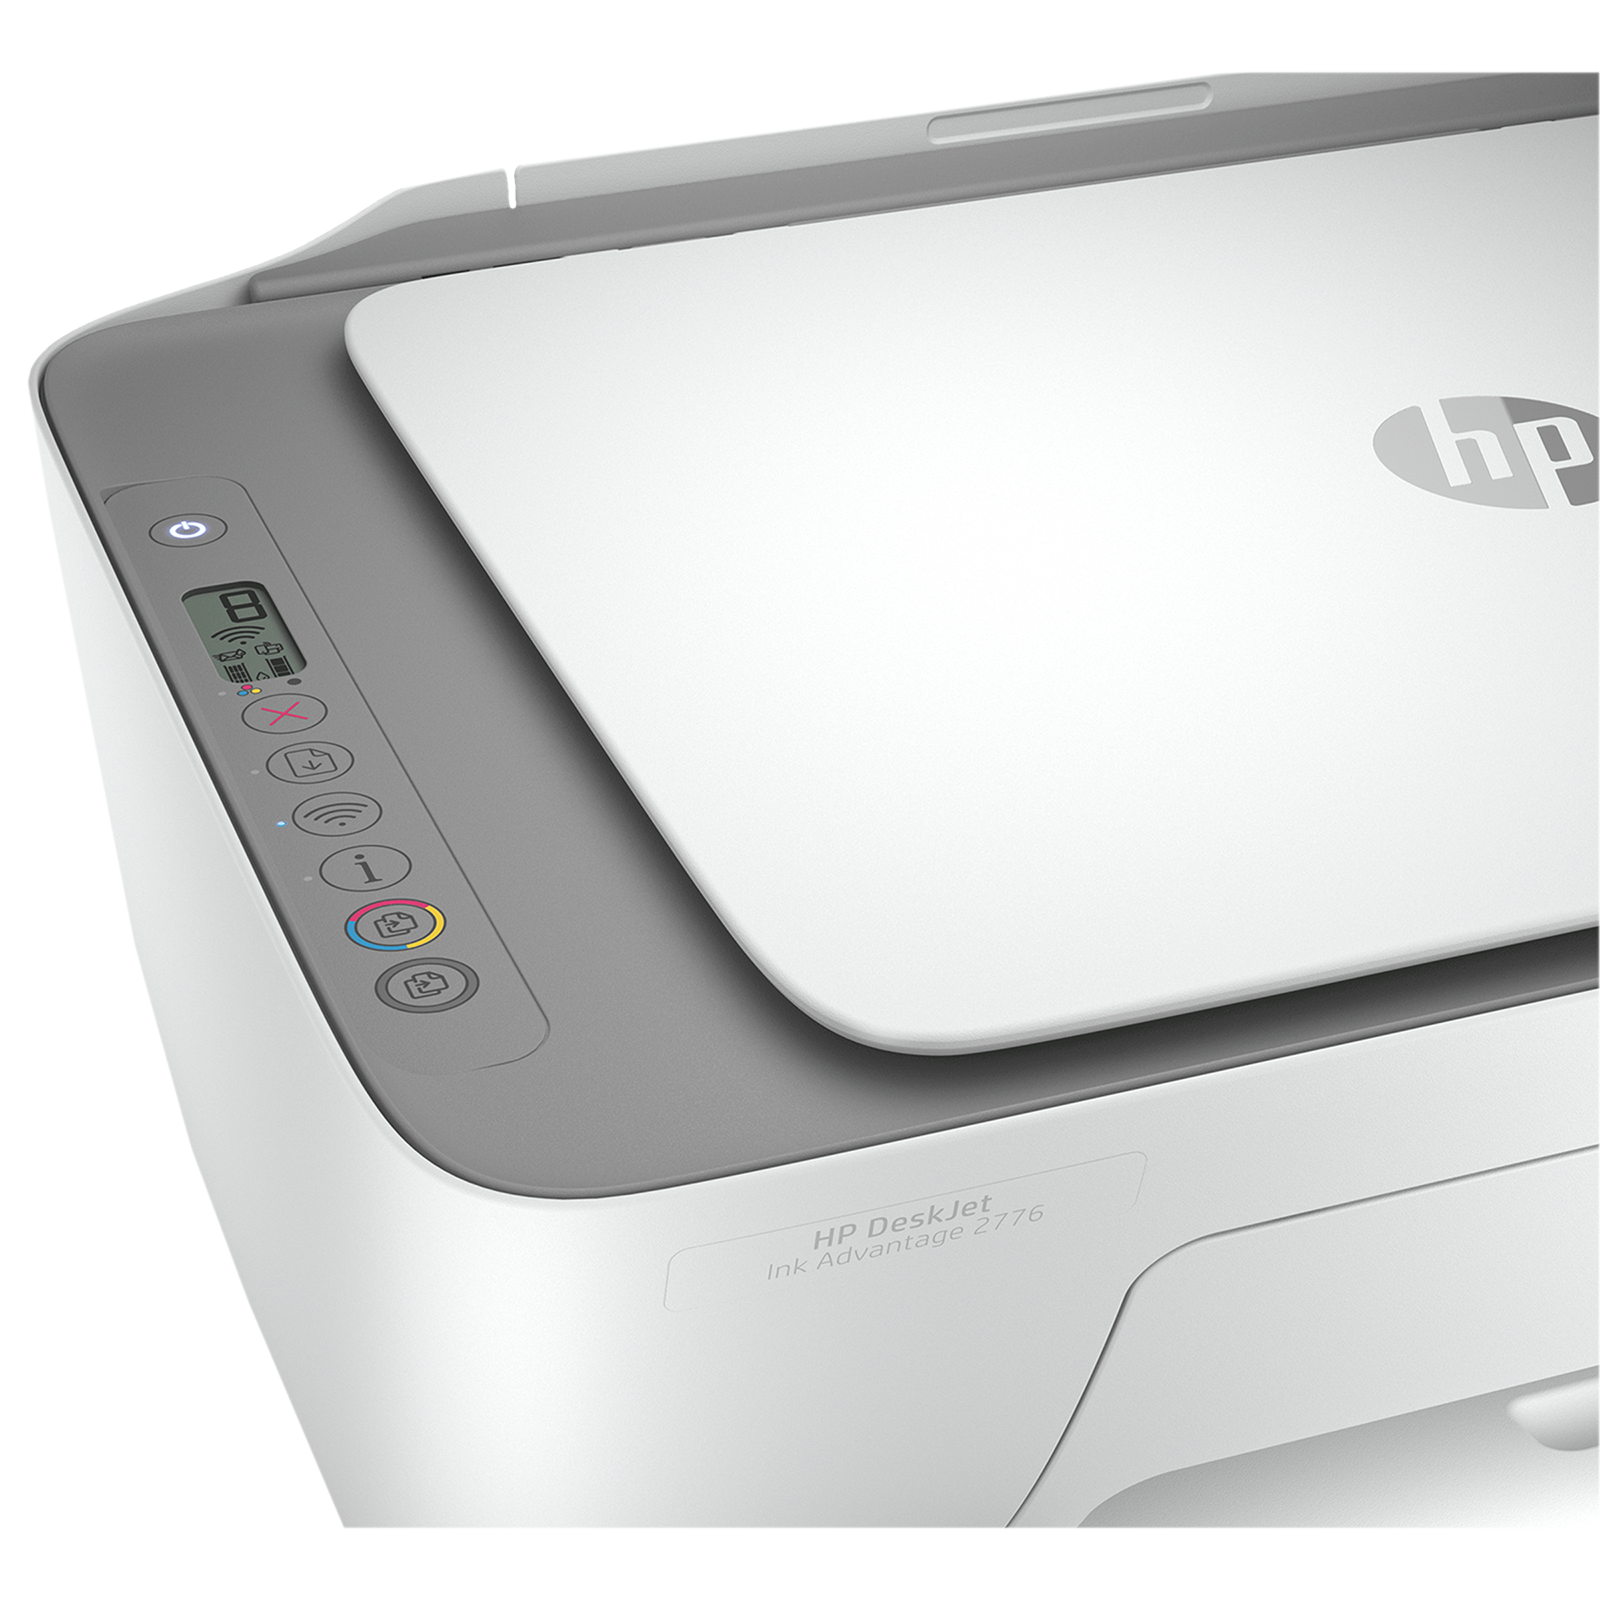 Impresora Multifuncional HP DeskJet Ink Advantage 2774 Color Wi